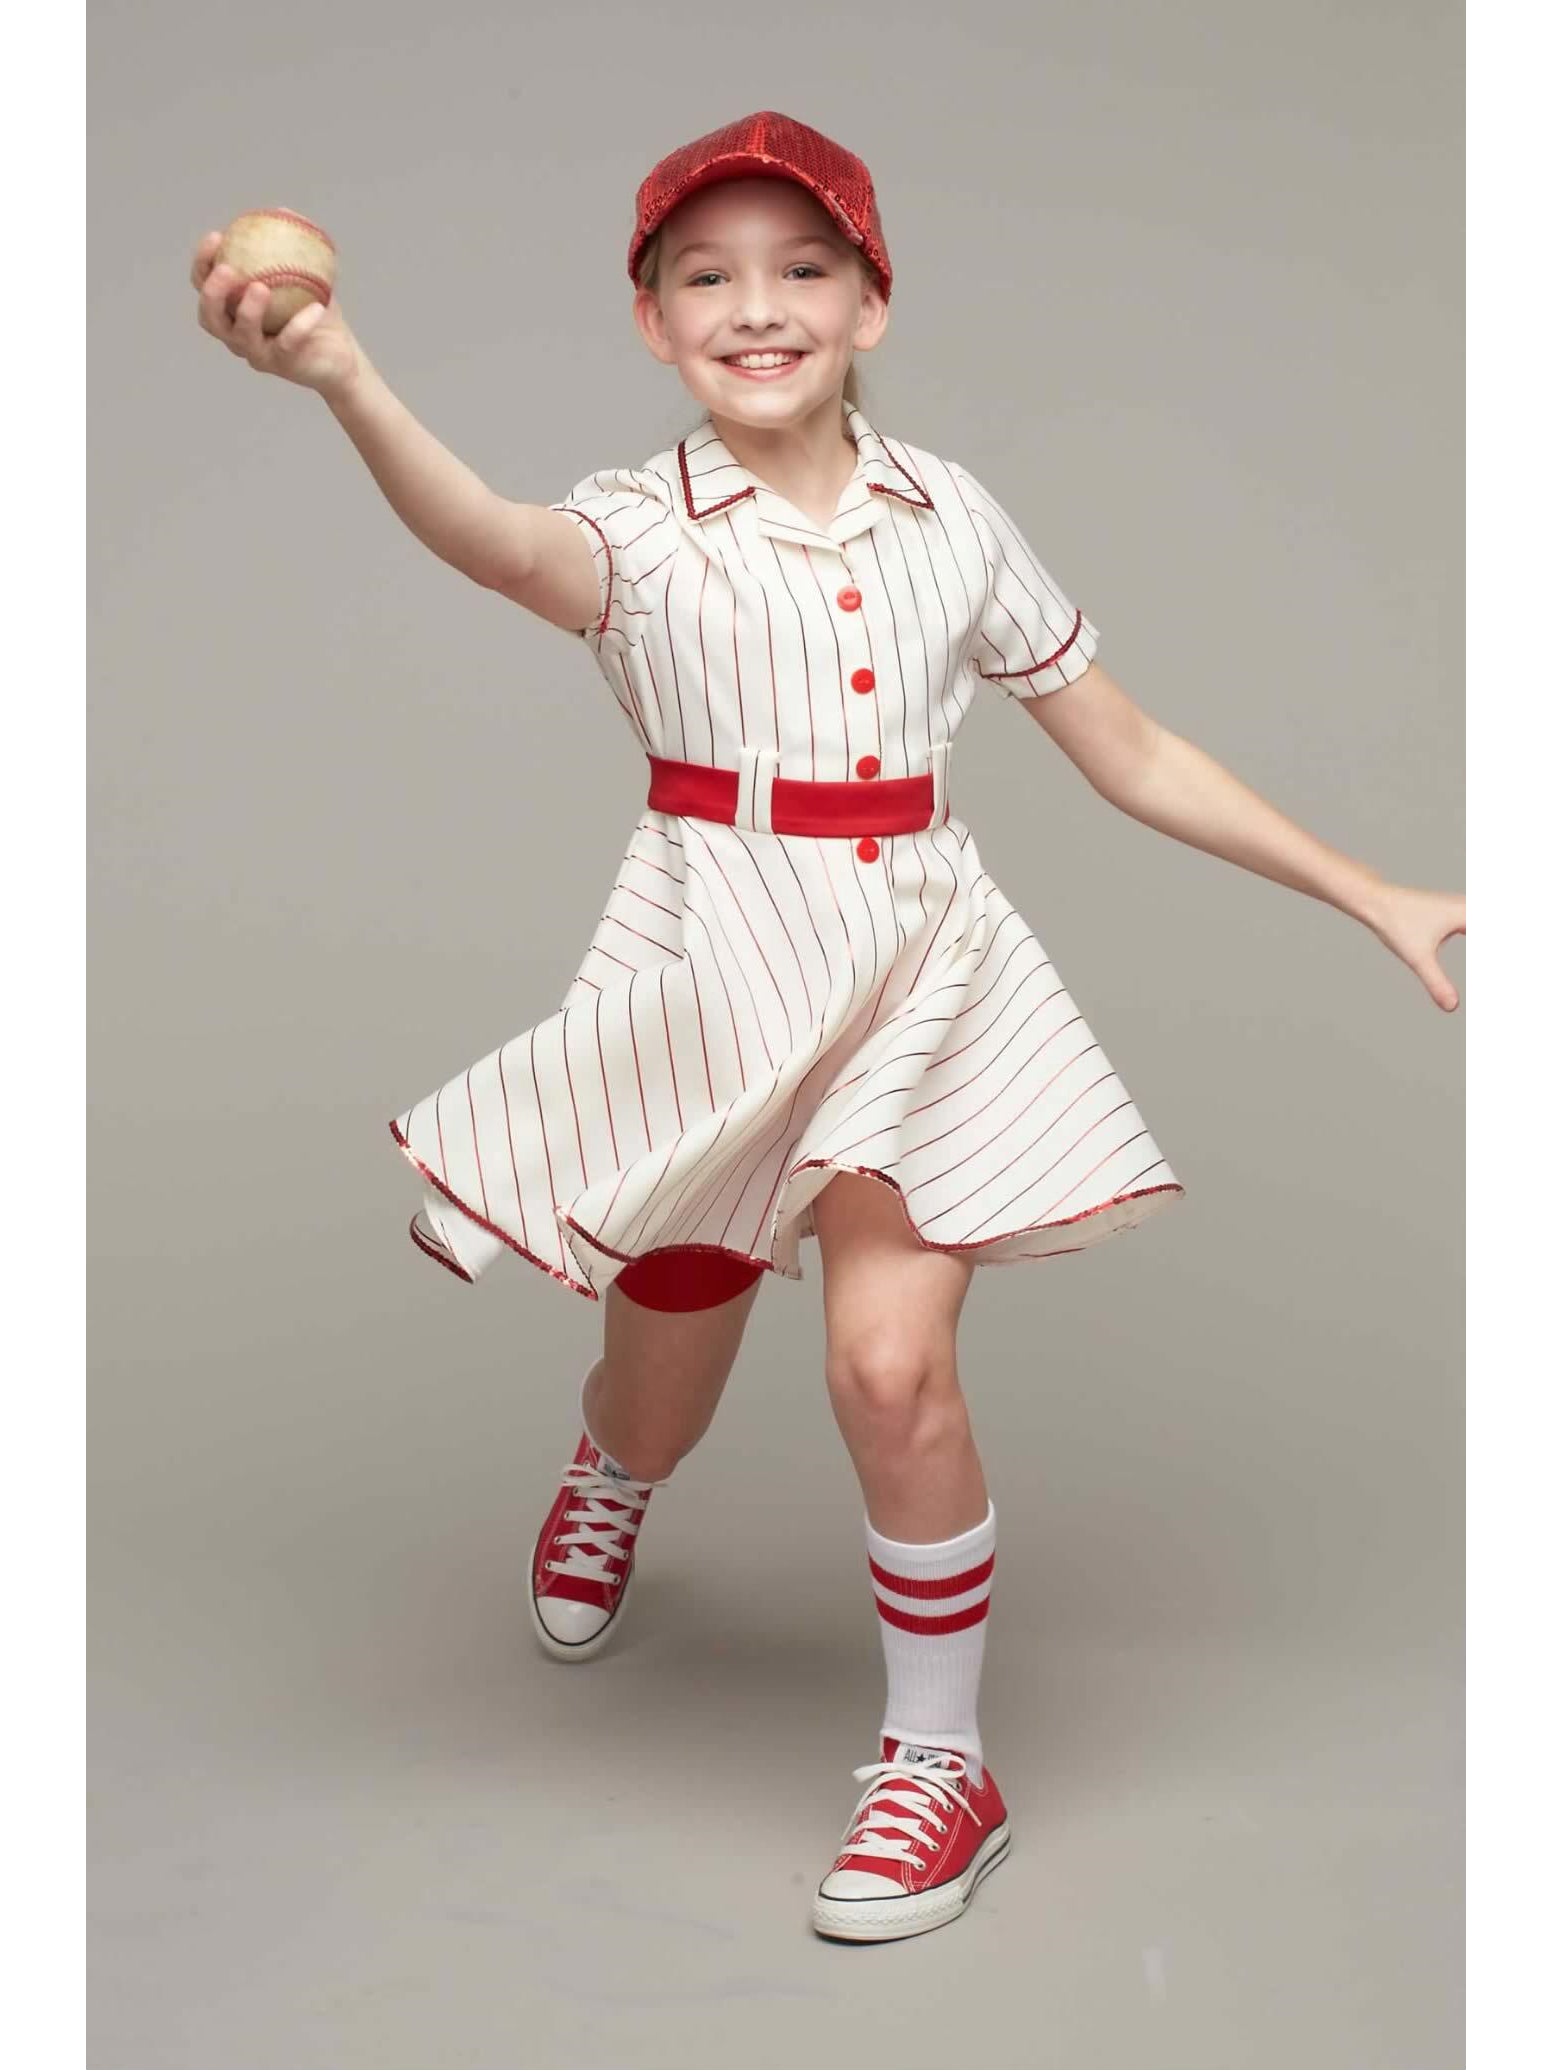 Chasing Fireflies Retro Baseball Player Costume for Girls